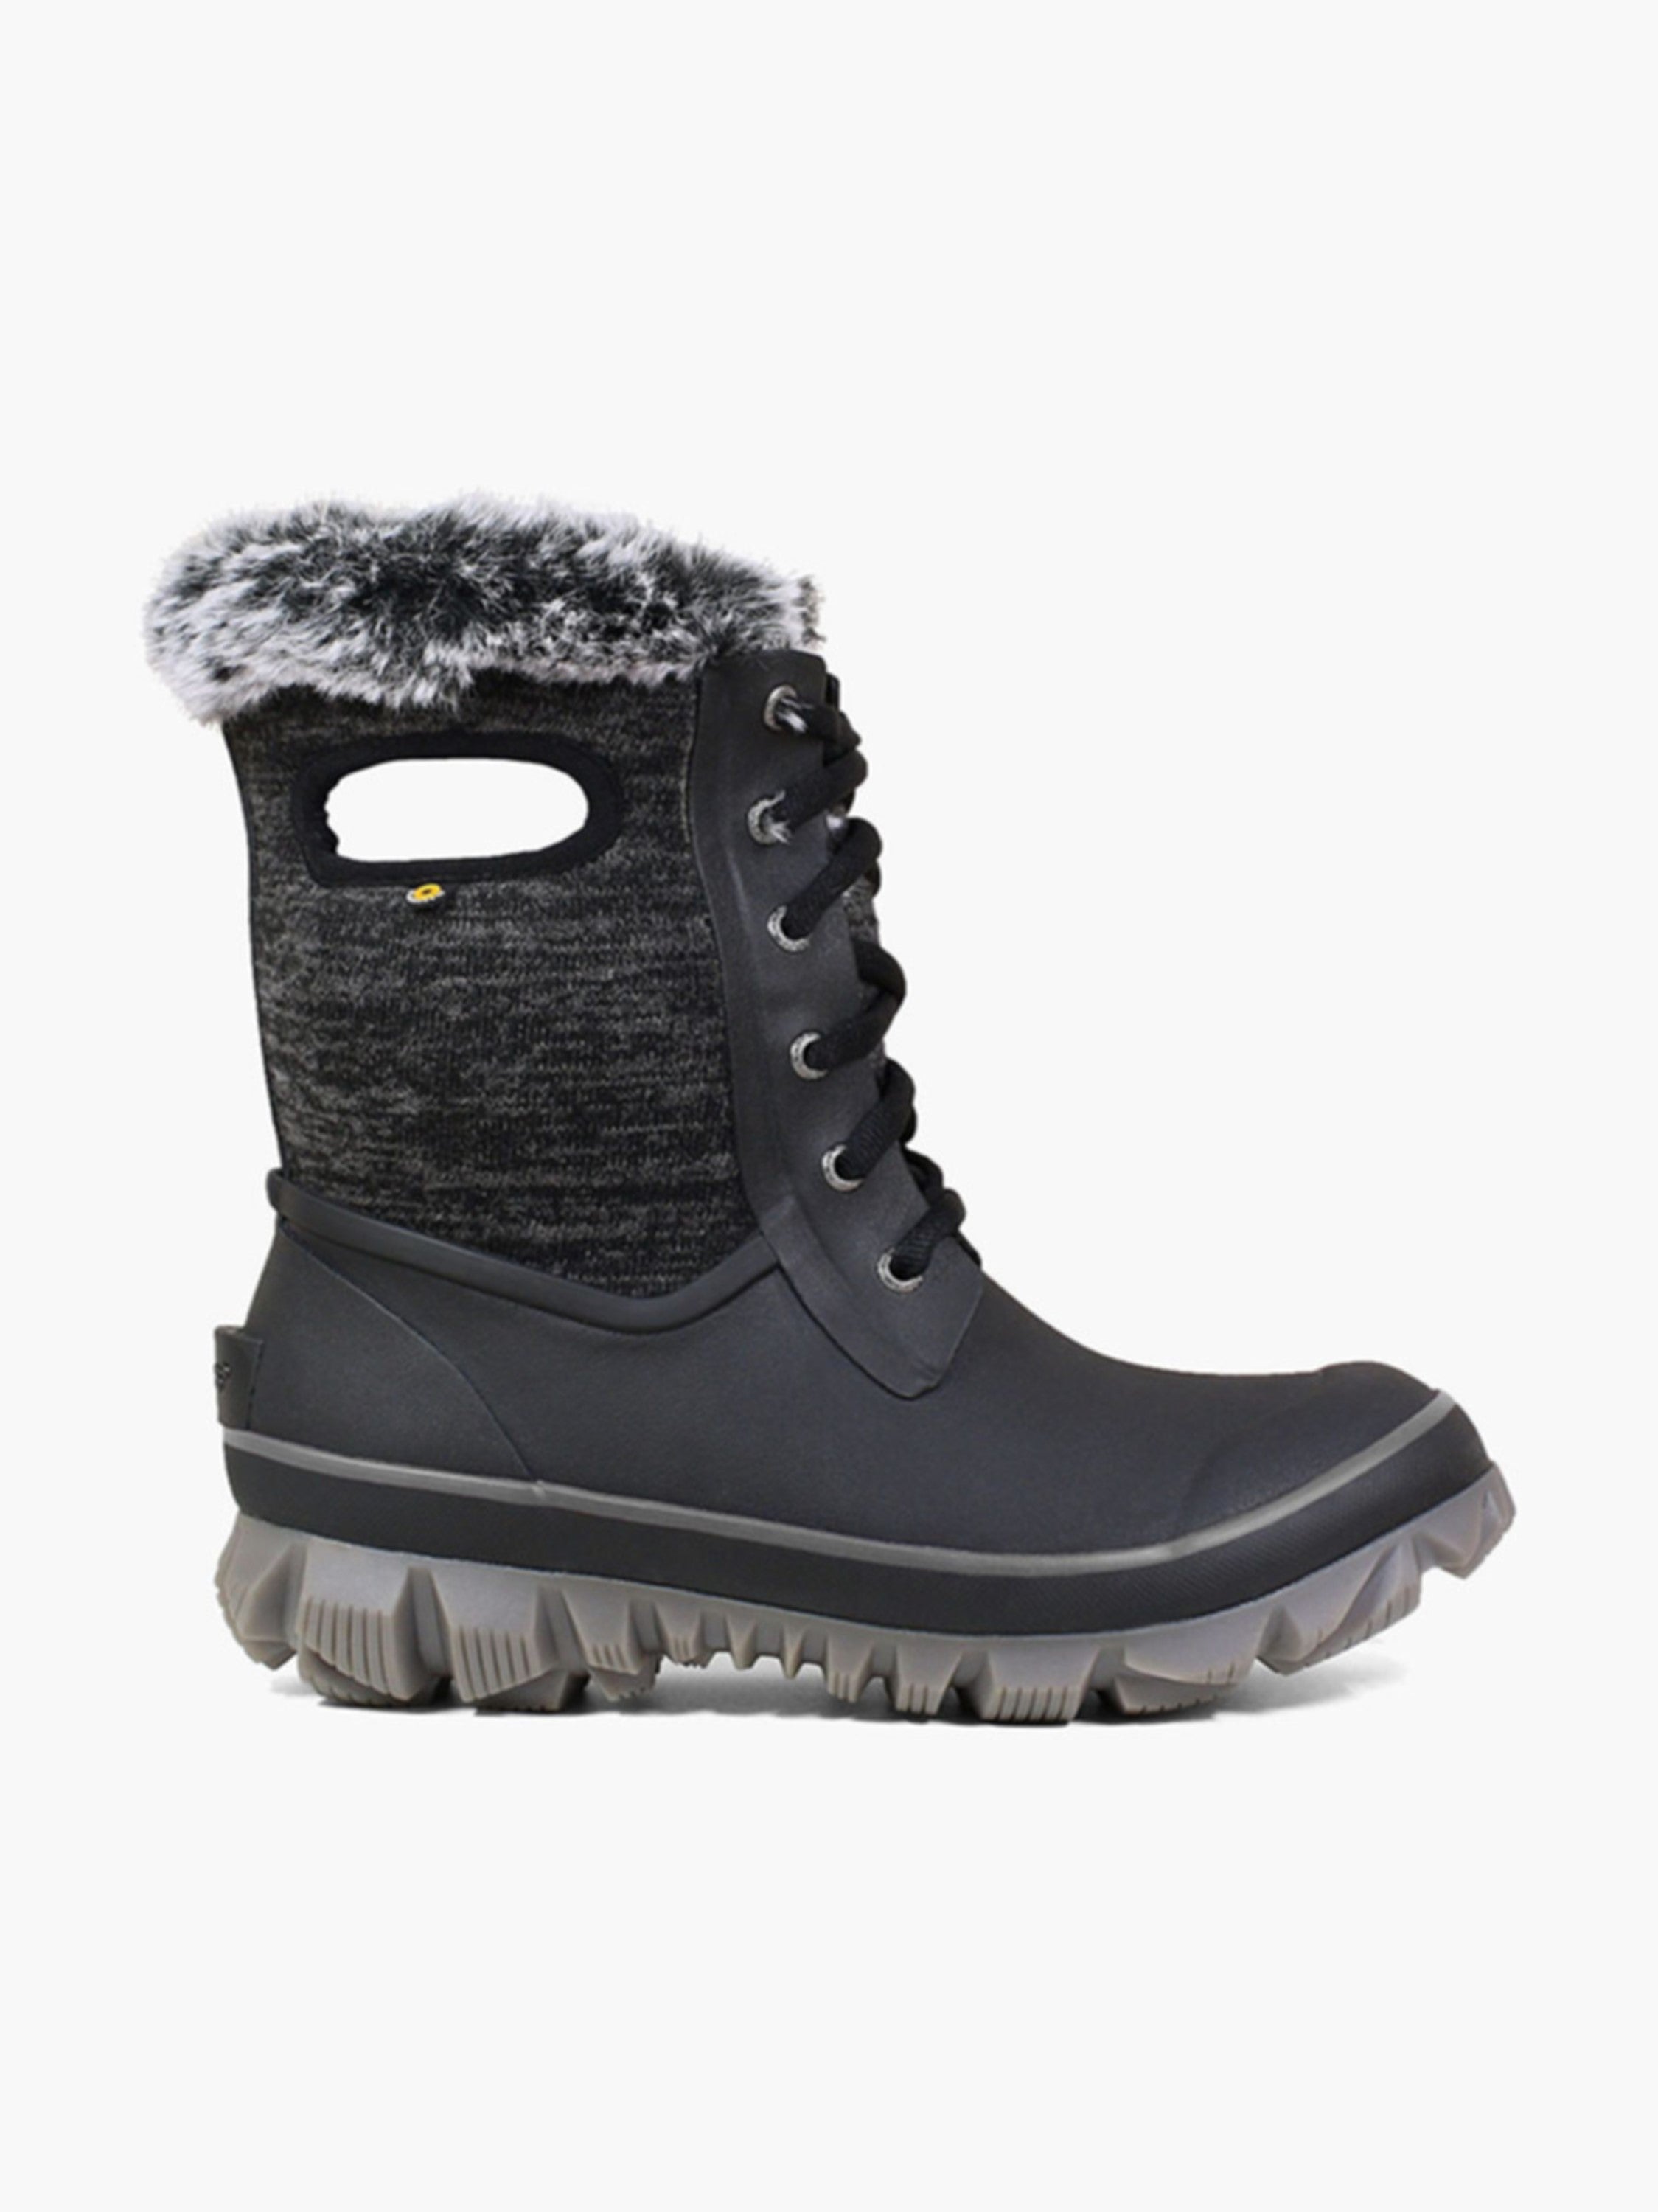 Arcata Knit Women's Waterproof Snow Boot - Black